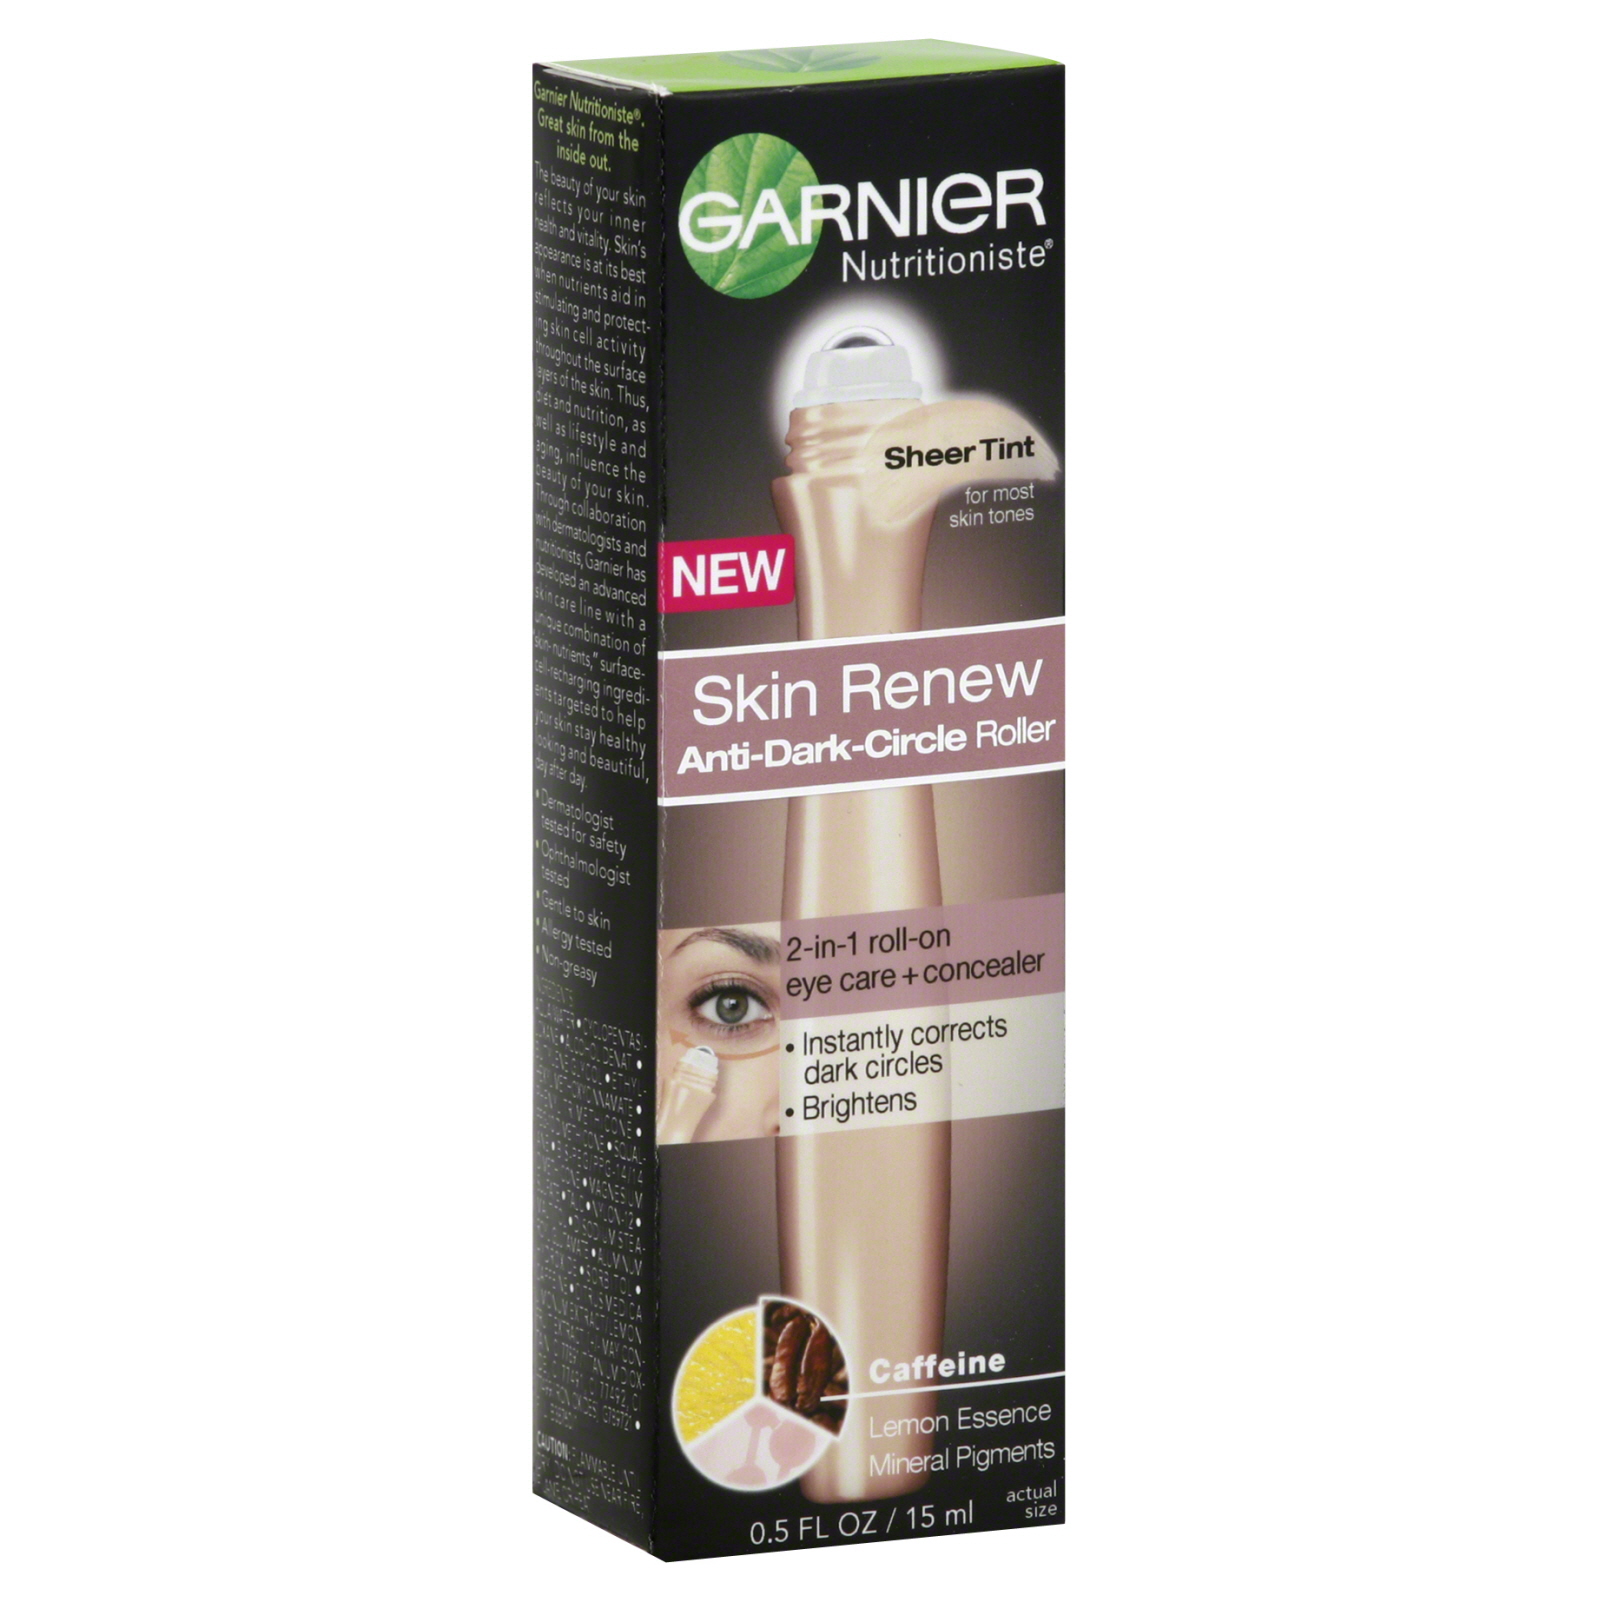 Garnier Nutritioniste Skin Renew Anti-Dark-Circle Roller, Sheer Tint, 0.5 fl oz (15 ml)